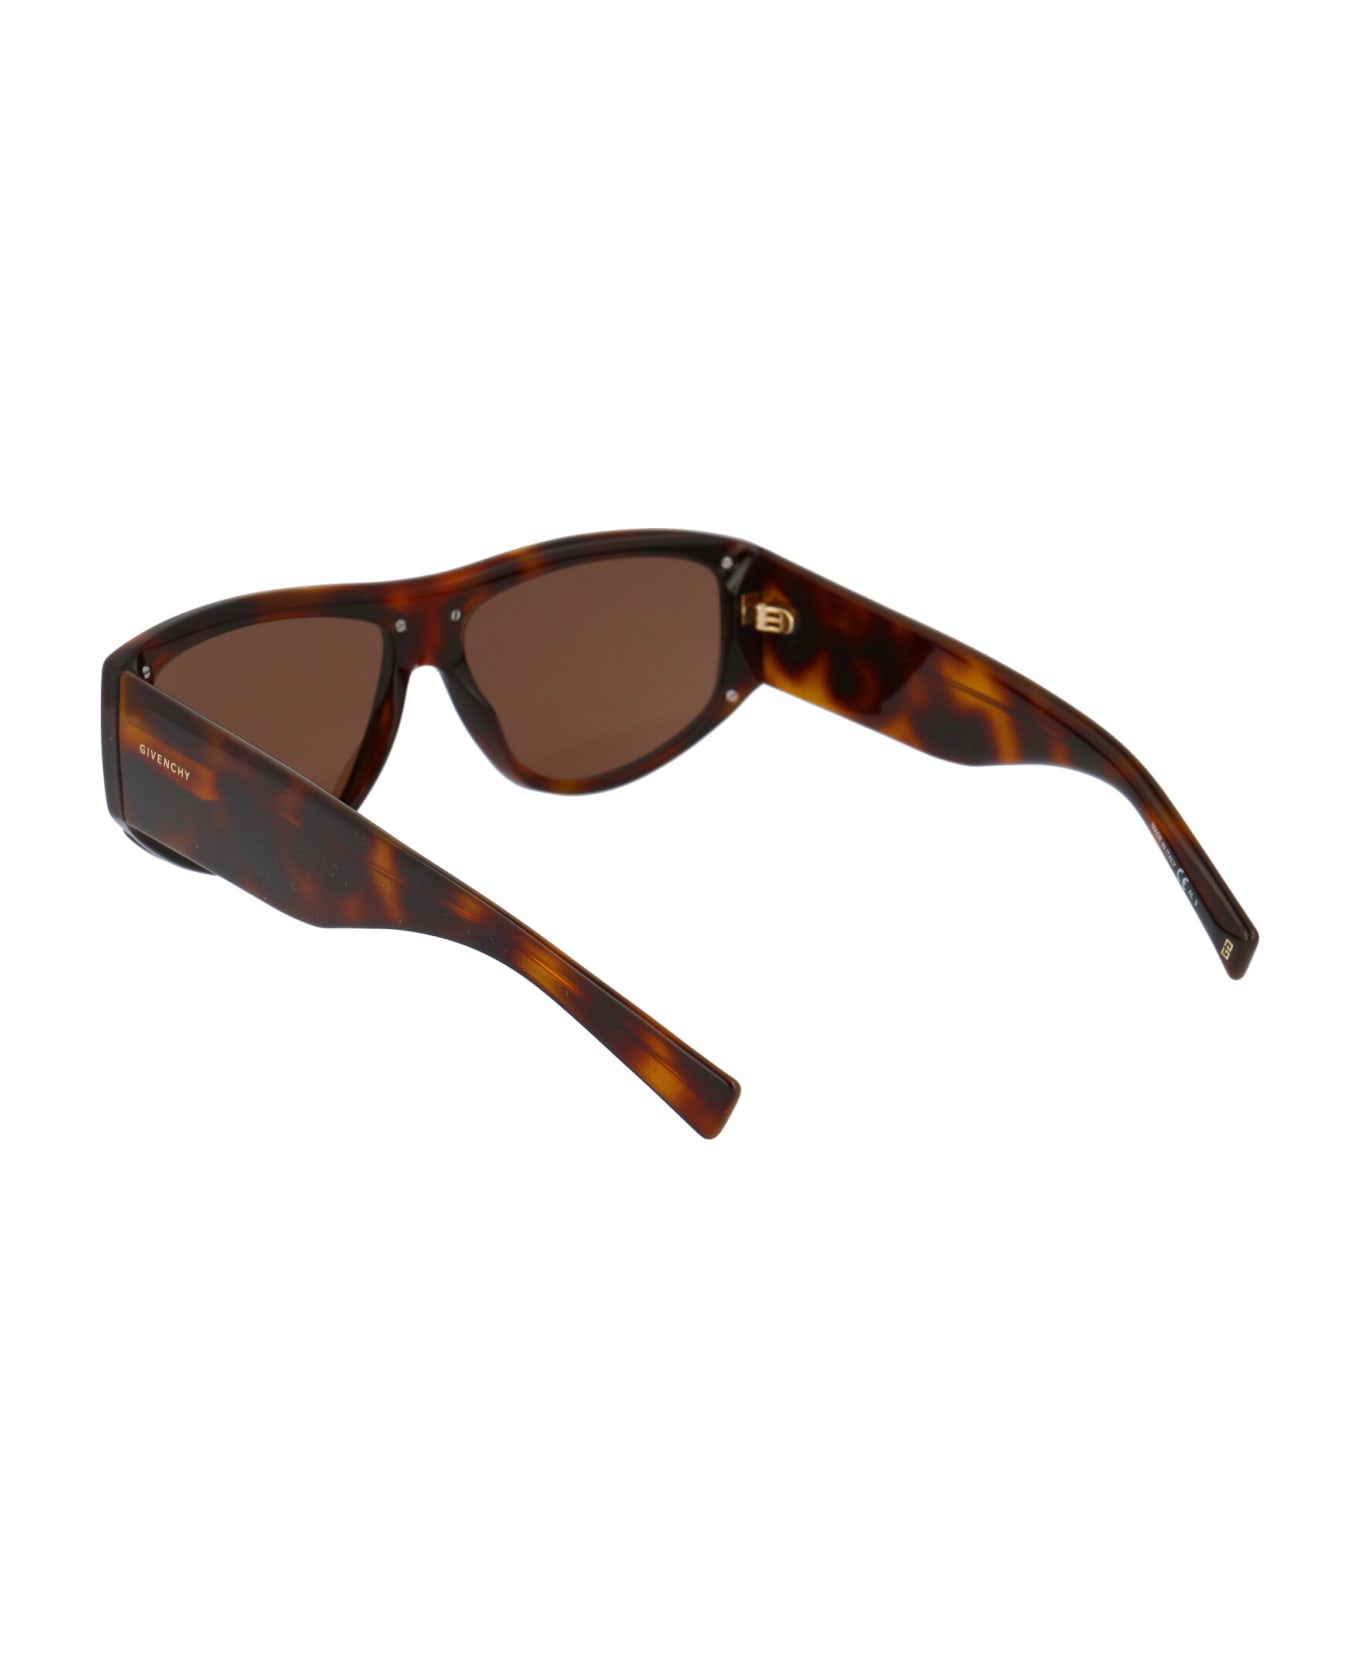 Givenchy Eyewear Gv 7177/s Sunglasses - 086VP HAVANA